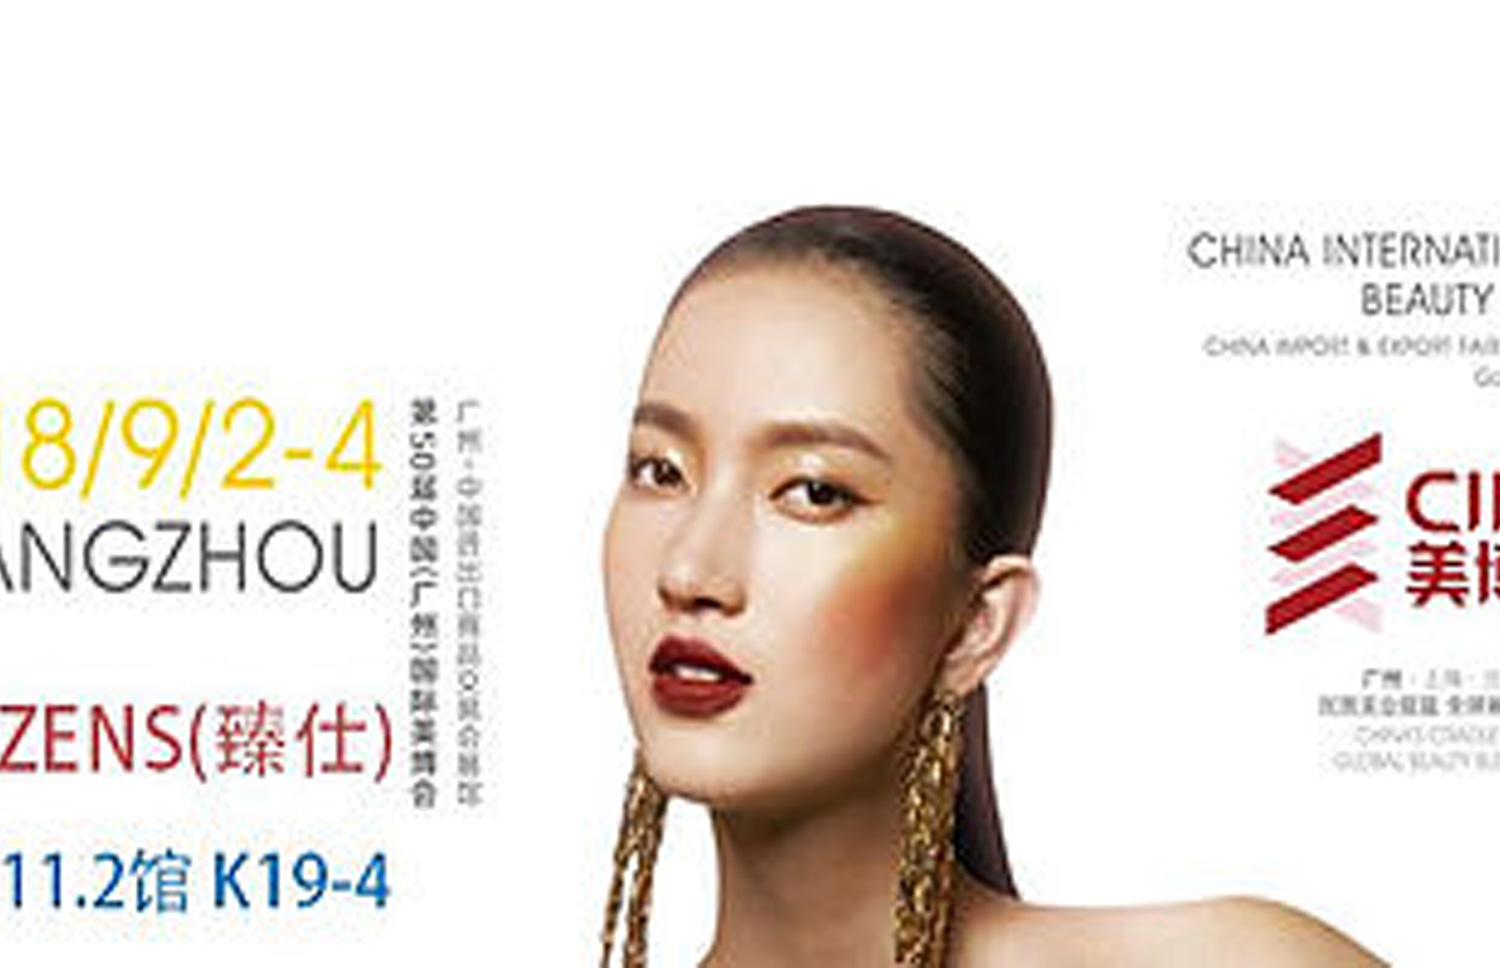 2018 China International Beauty Expo @Guang Zhou